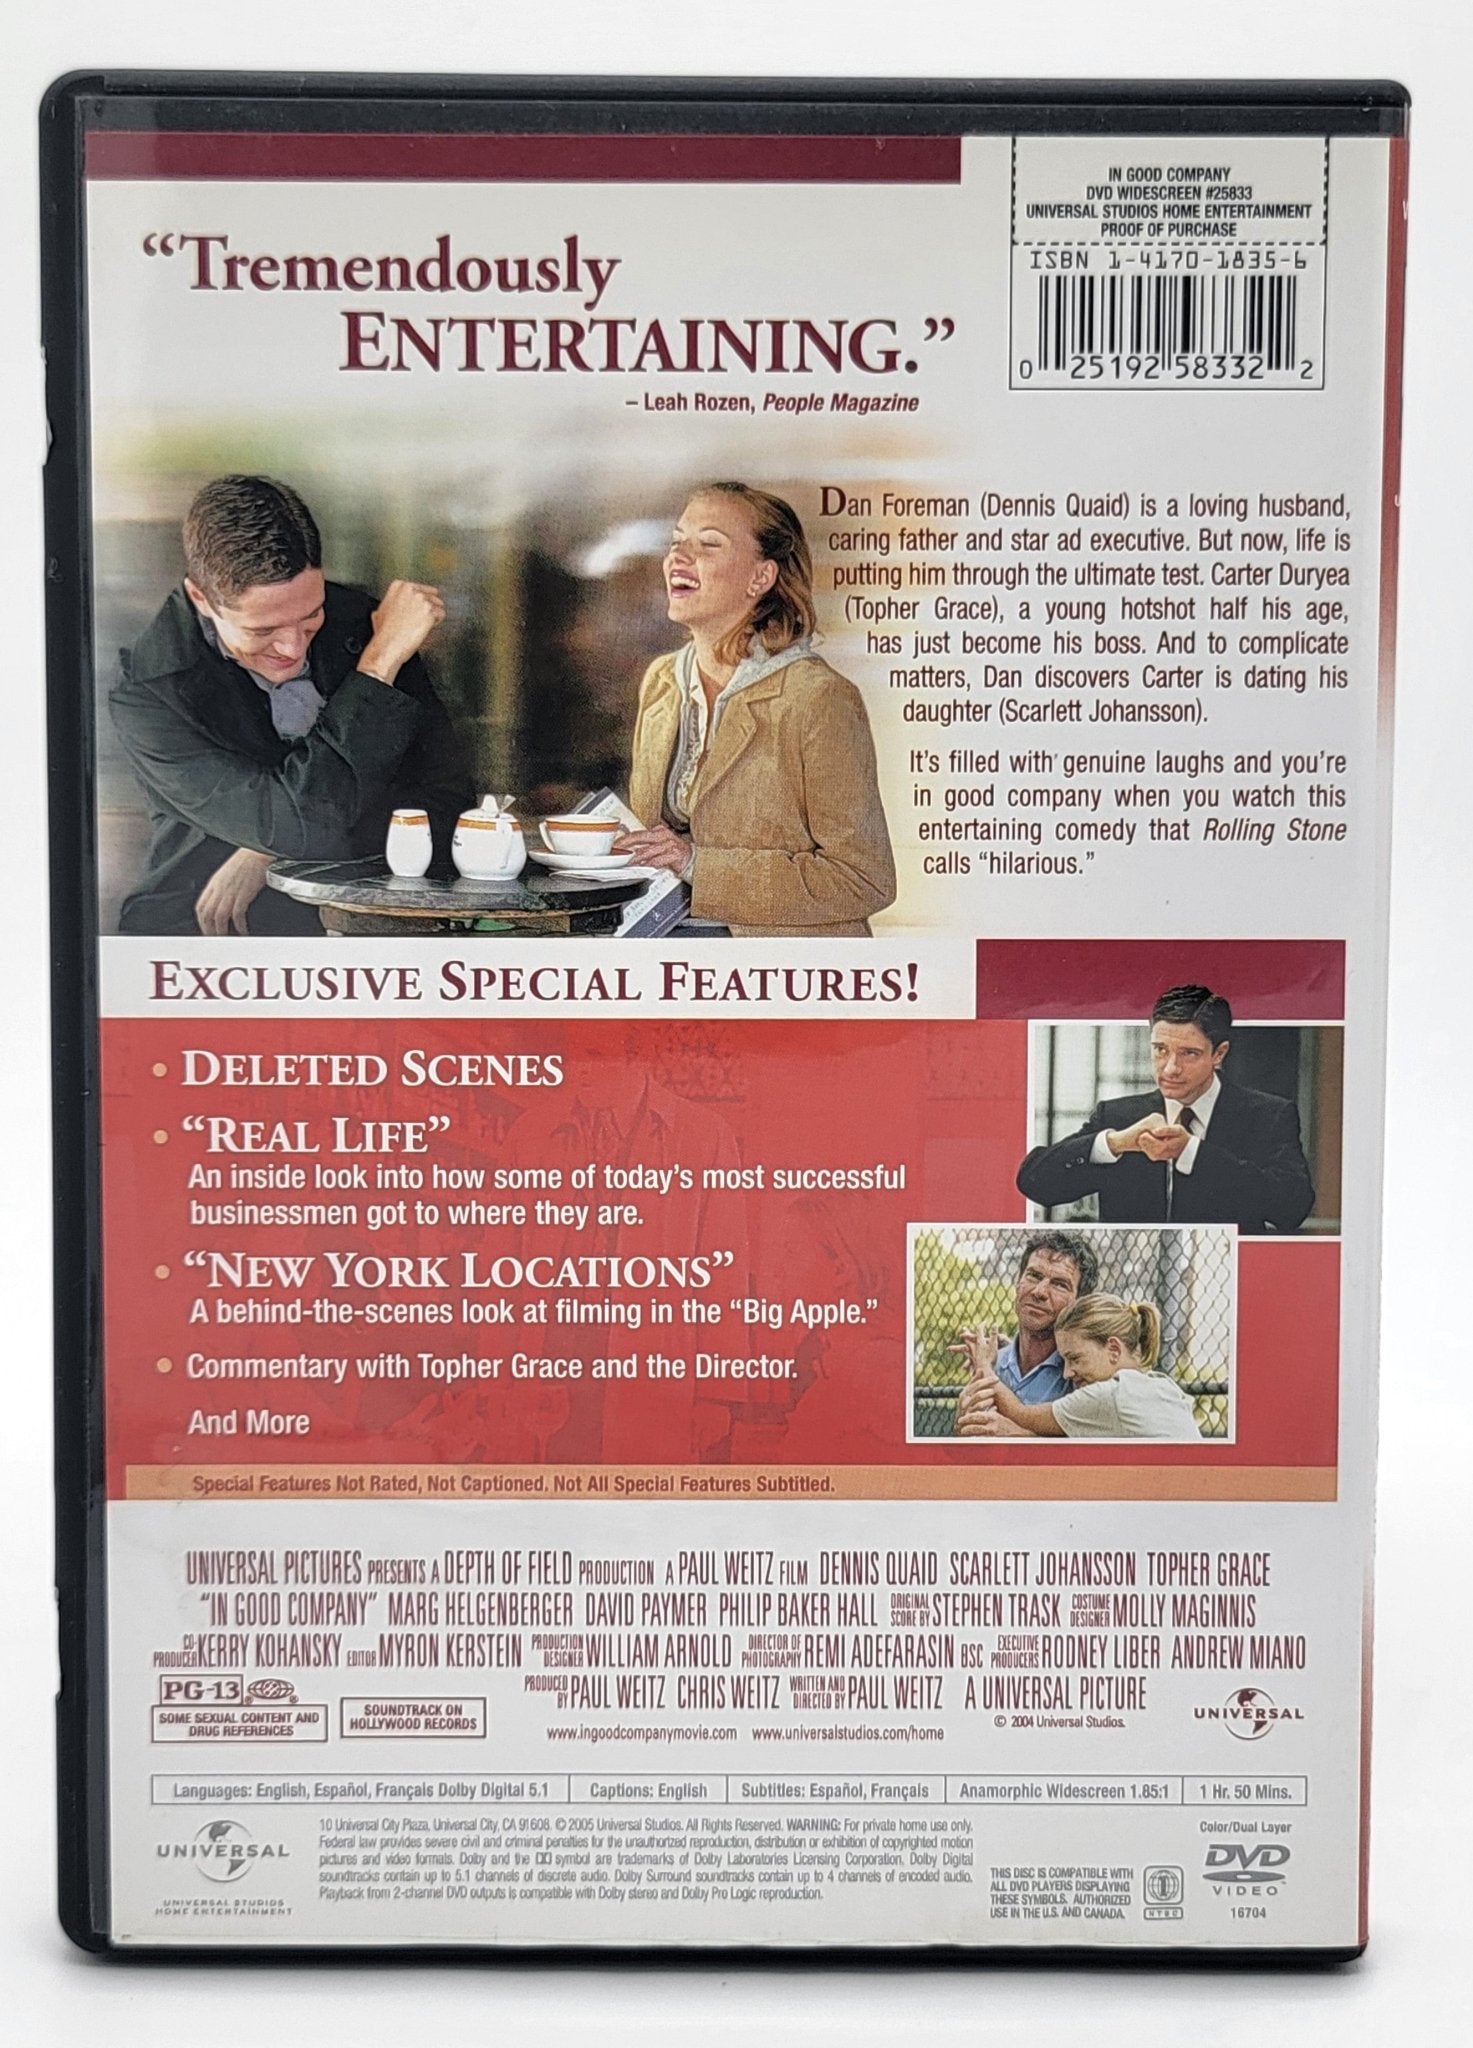 ‎ Universal Studios Home Entertainment - In Good Company | DVD | Widescreen - DVD - Steady Bunny Shop